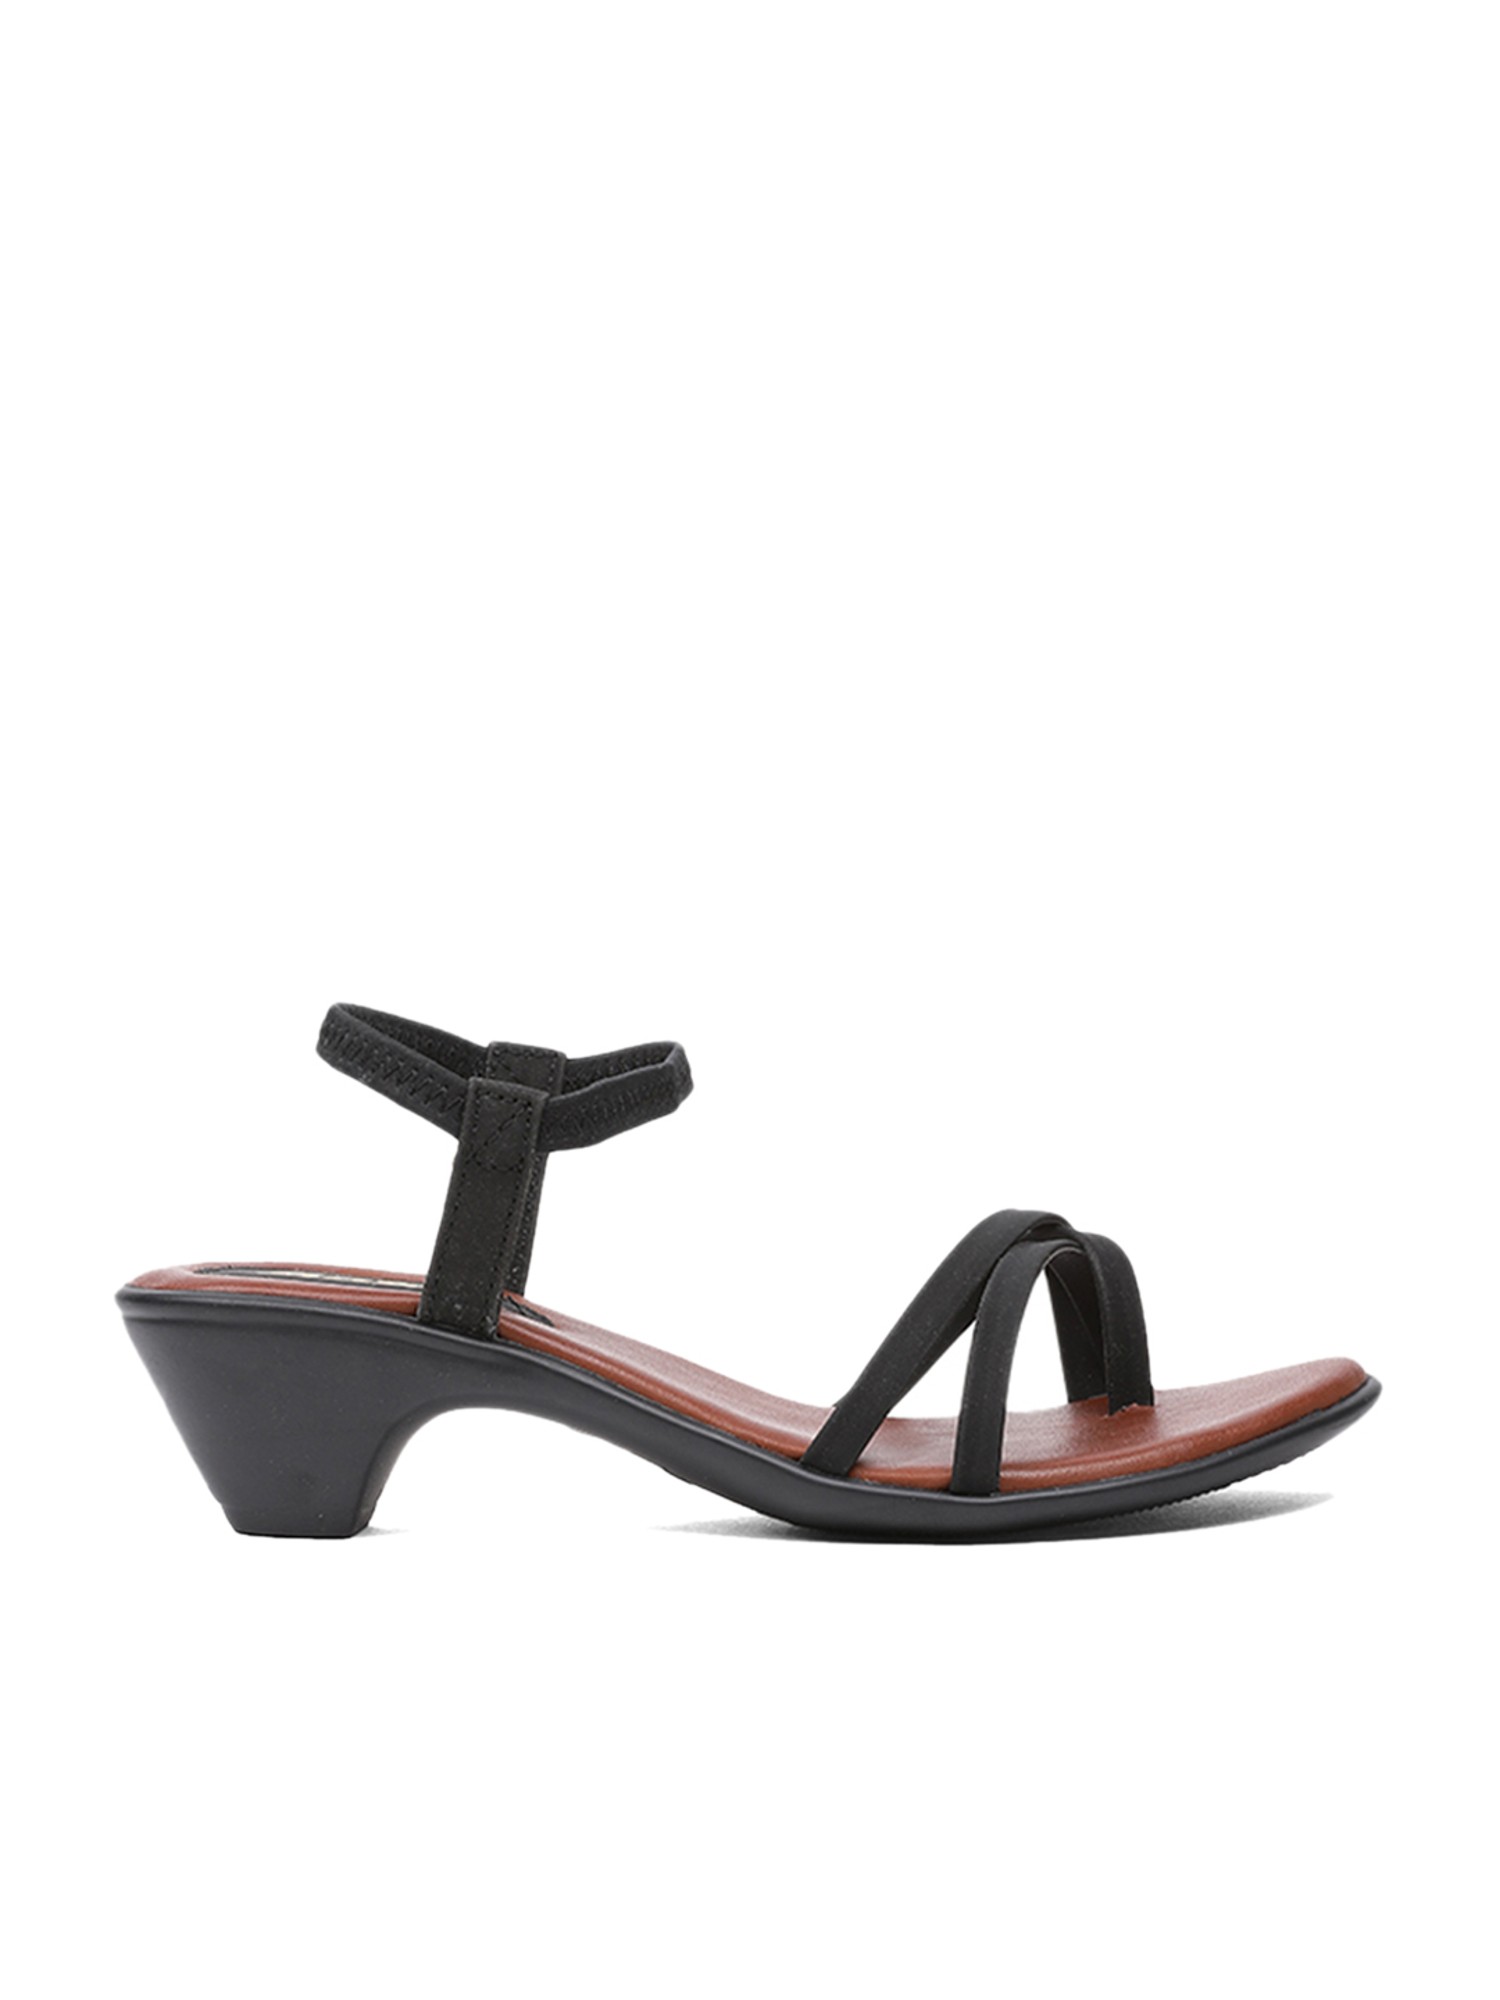 Leather Formal Bata Women Black Sandals F661613300 Size 3 4 5 6 7